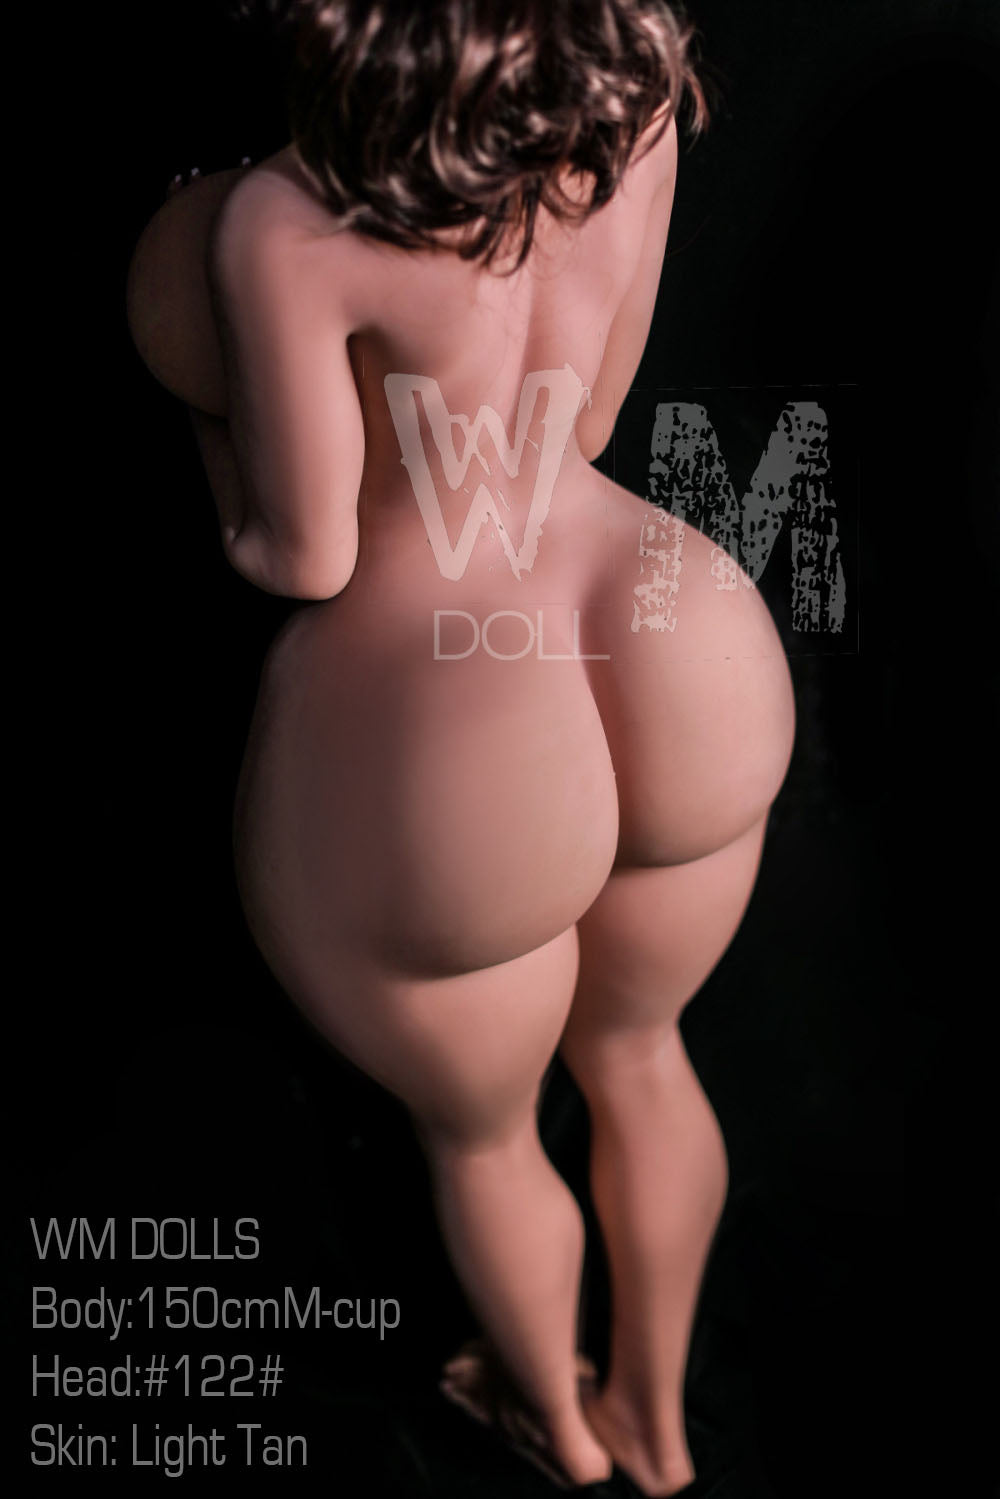 WM DOLL 150 CM M TPE - Kris | Buy Sex Dolls at DOLLS ACTUALLY